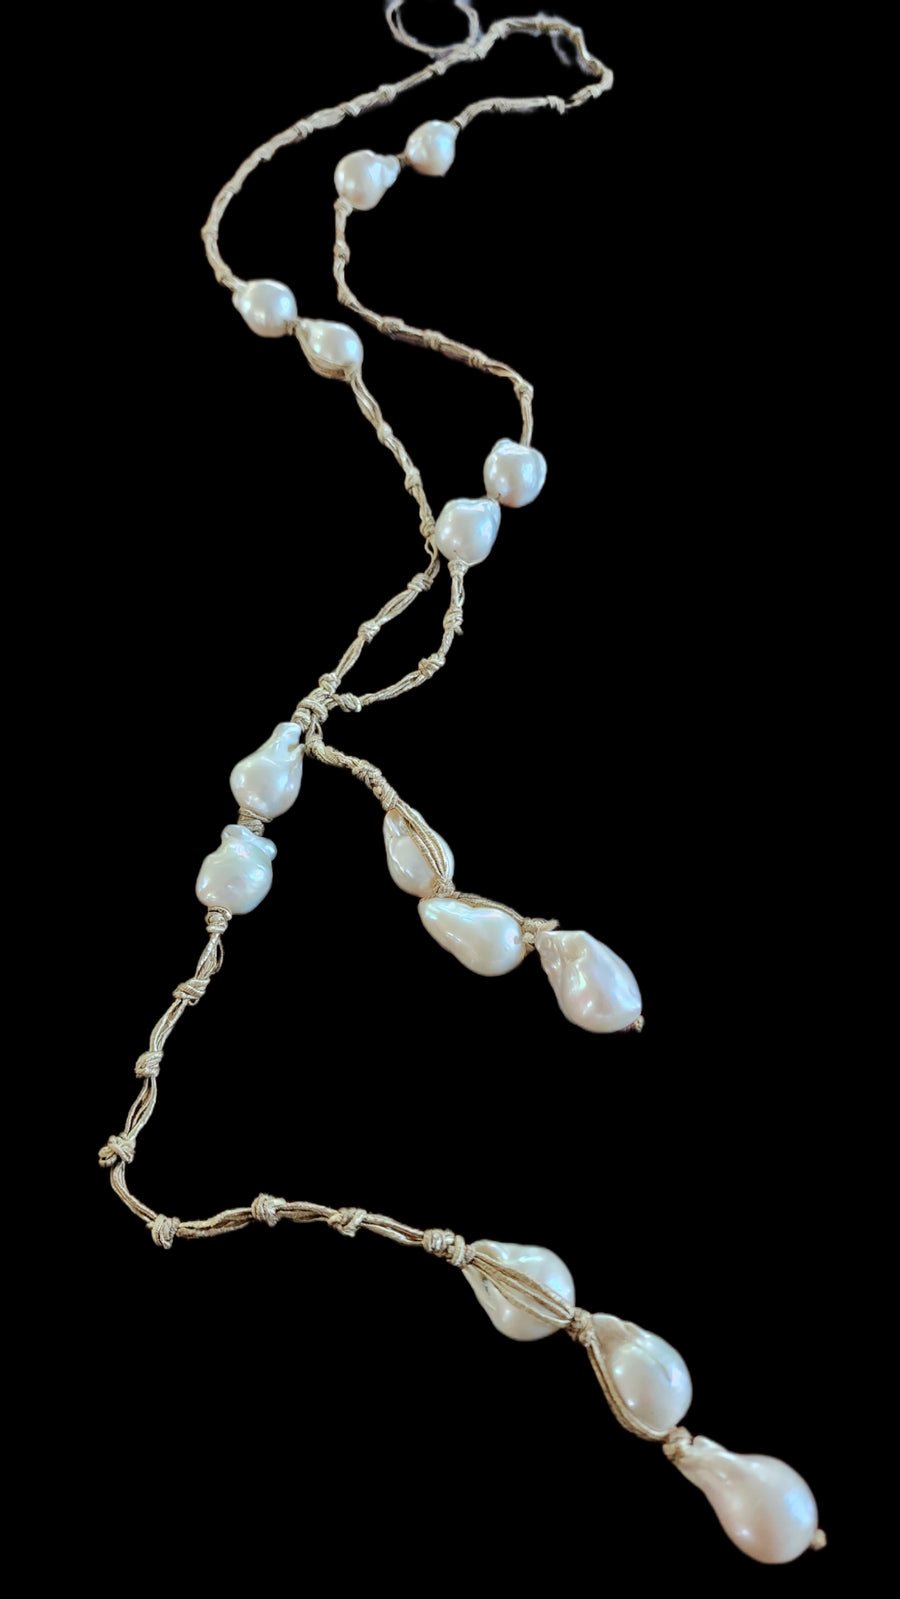 Mela multi pearl necklace on silk thread - white pearls